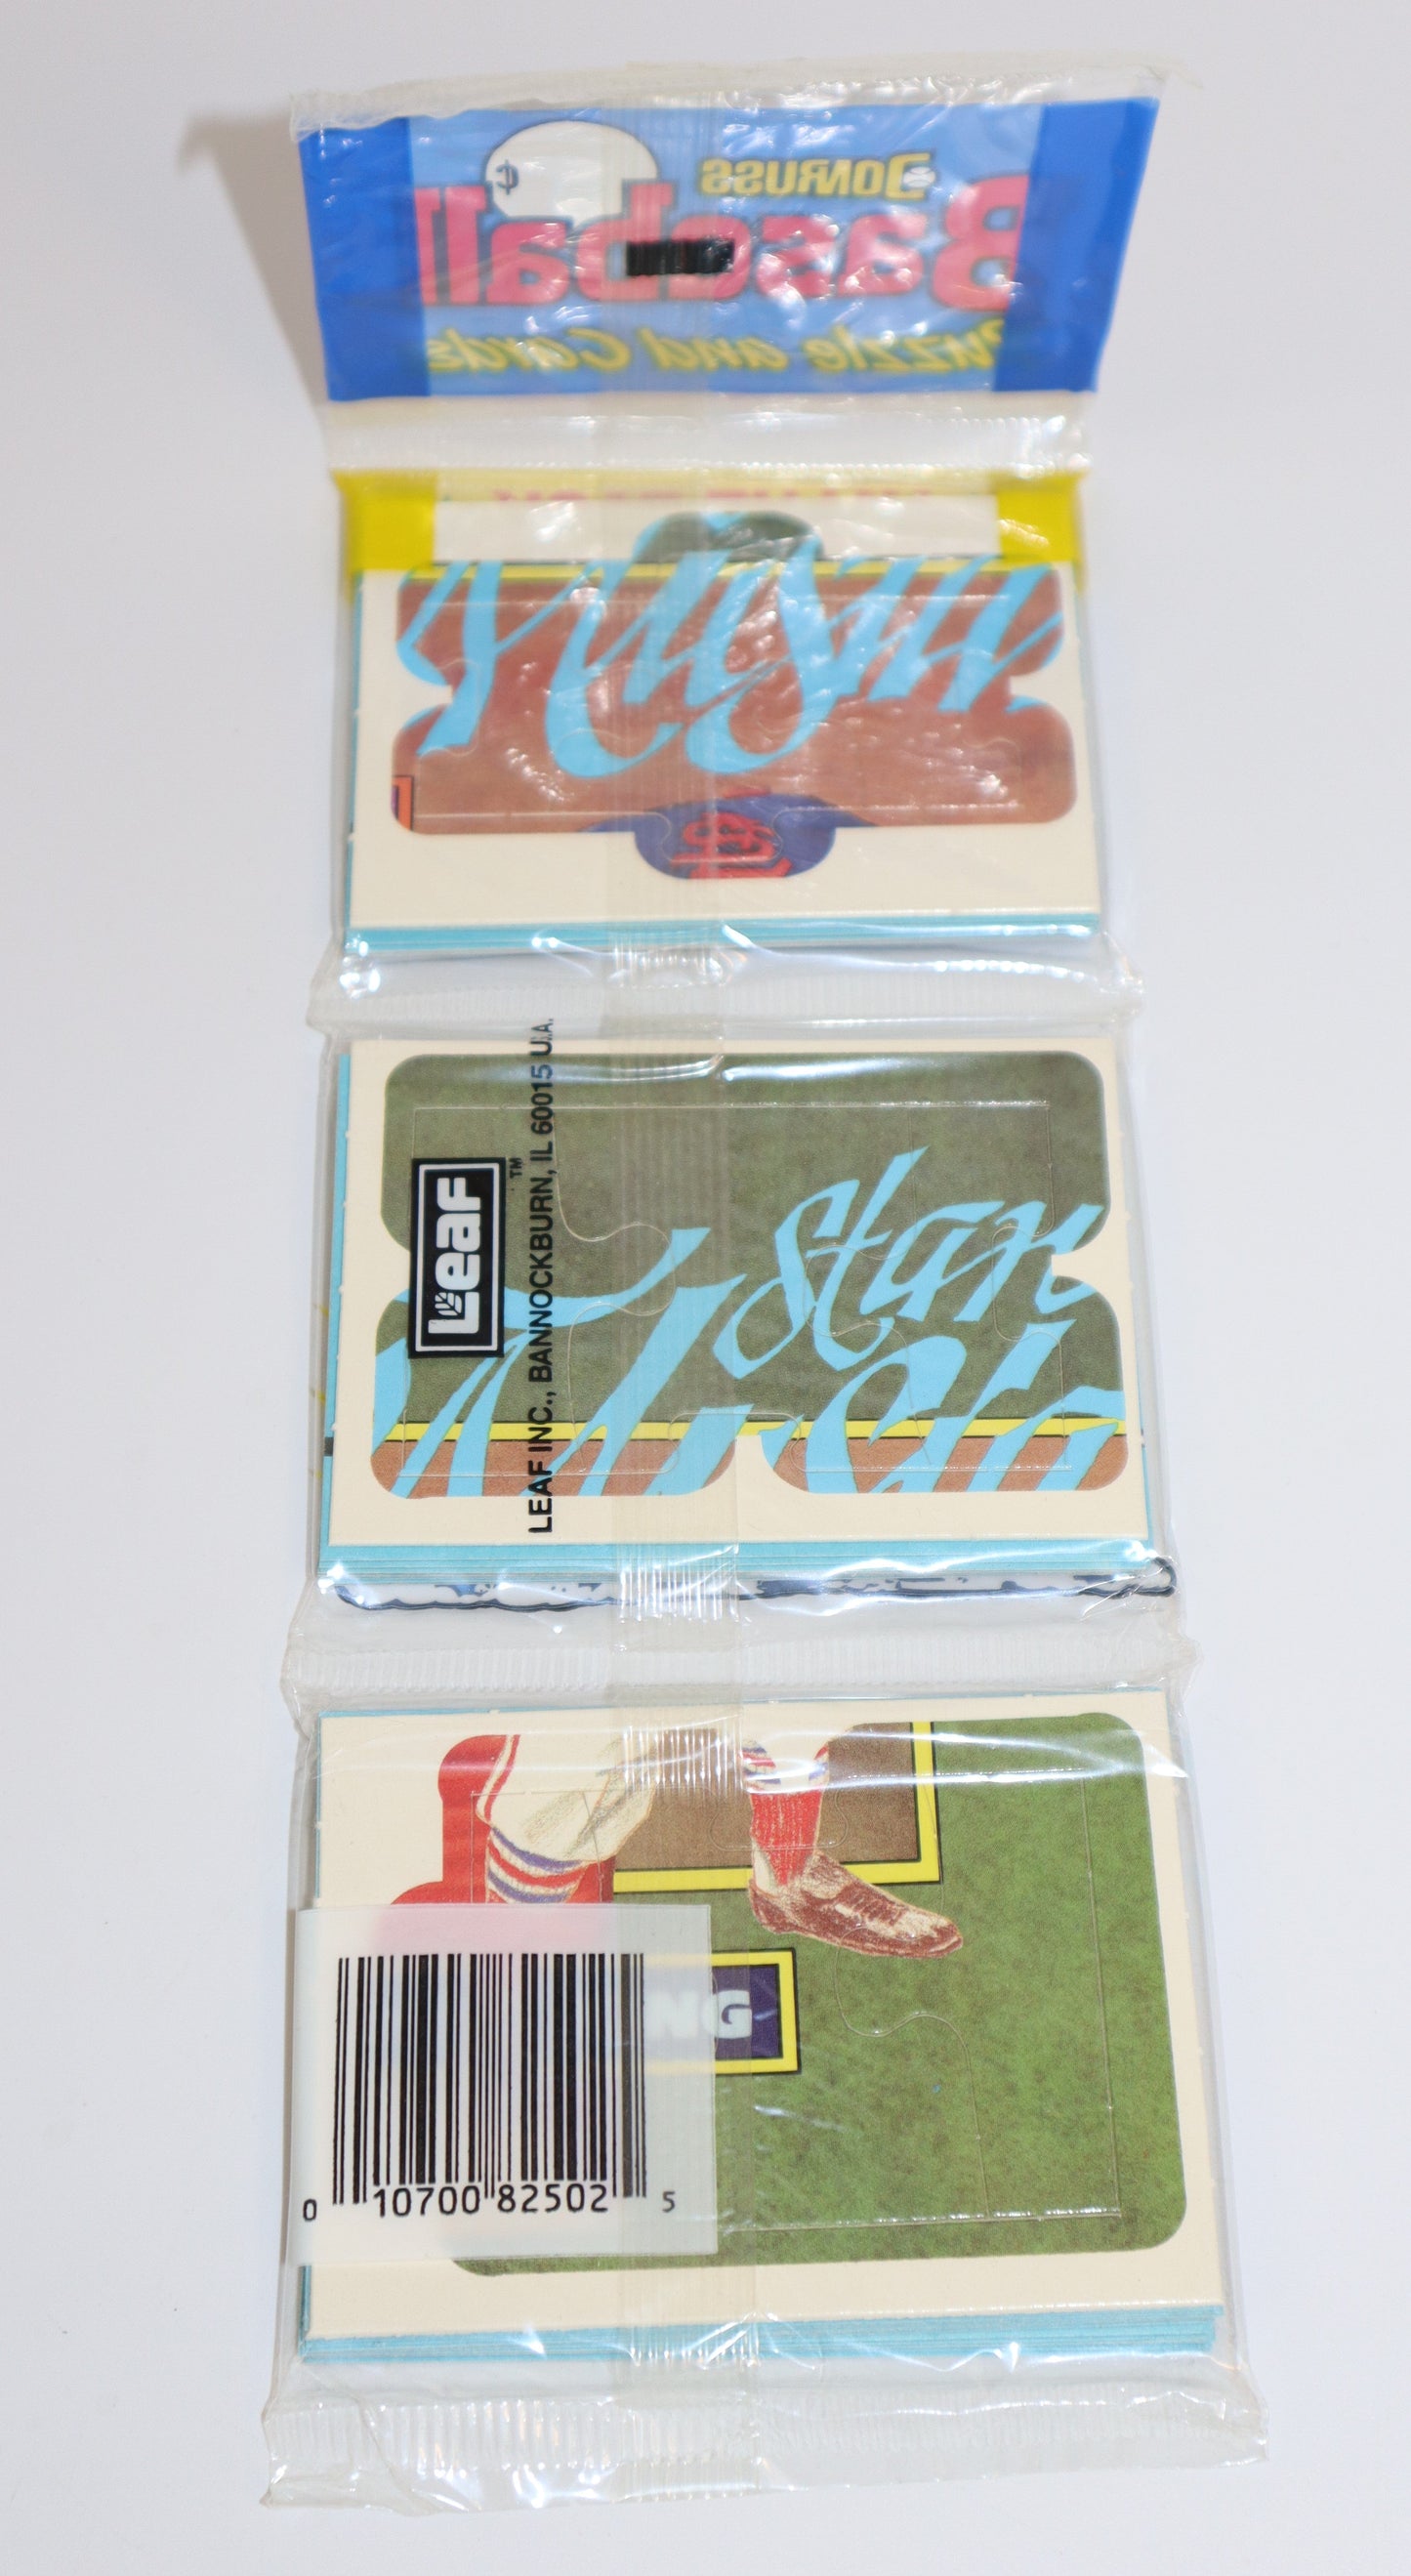 1988 Donruss Baseball Cards Rack Pack - Collectibles